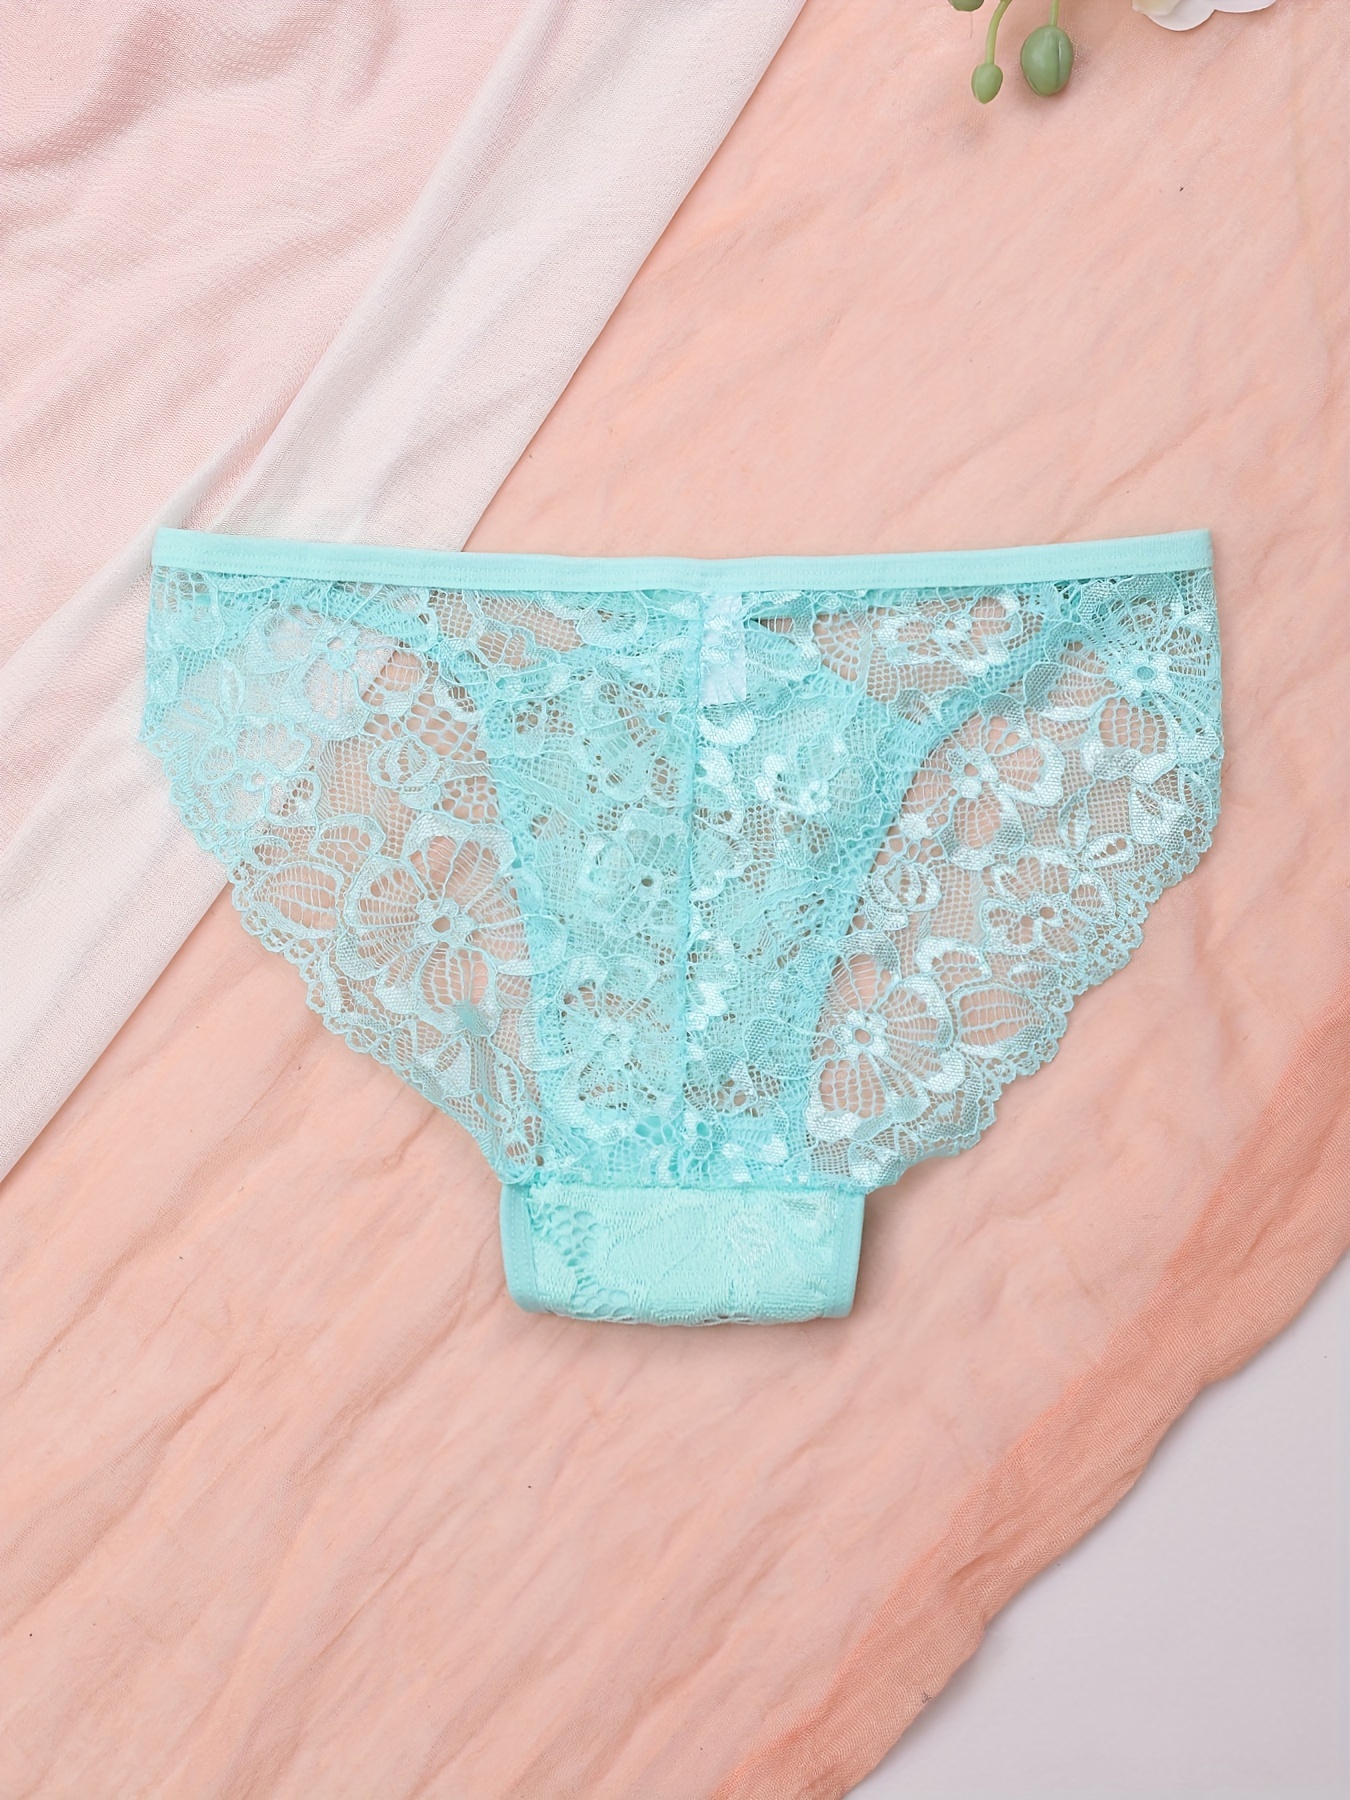 Buy Bikini, Deep Neck Lace Bra Underwear Lingerie Hipster, NRLS15-Pink